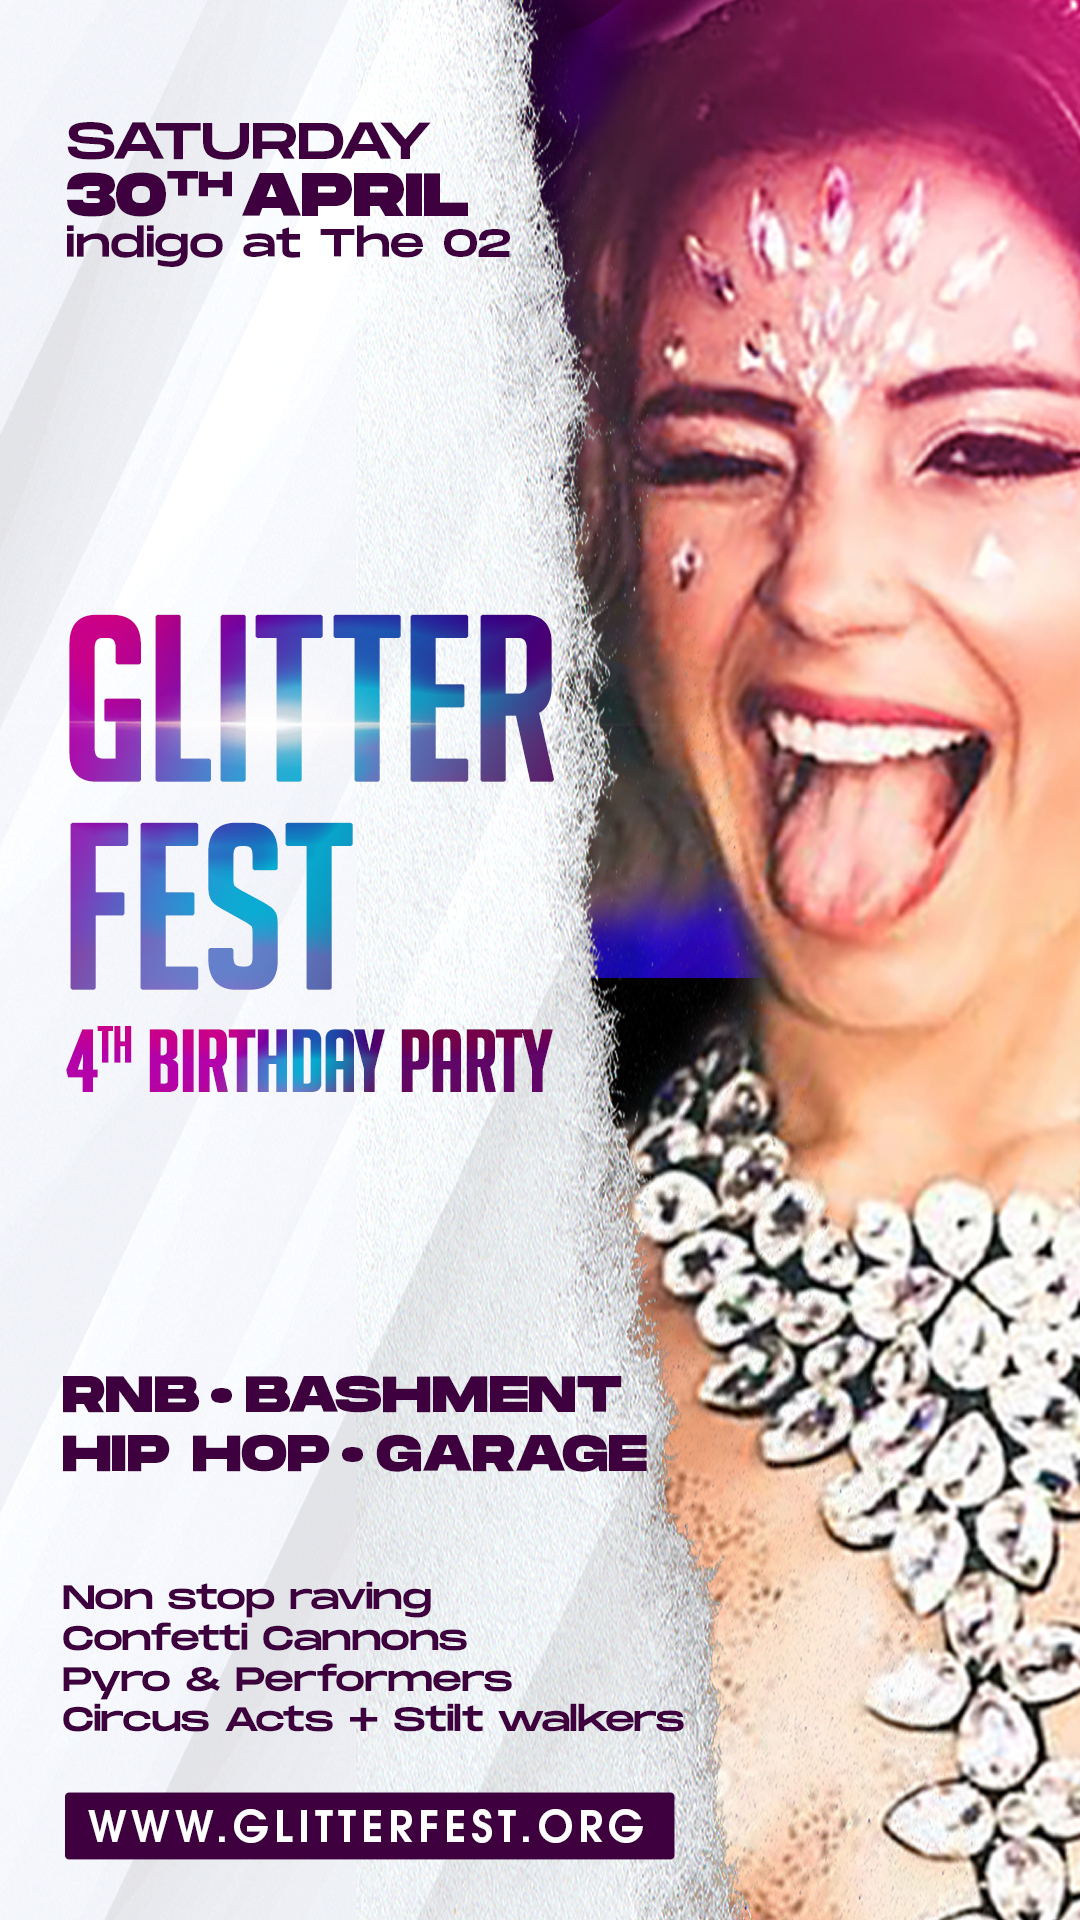 Glitterfest party at the indigo2